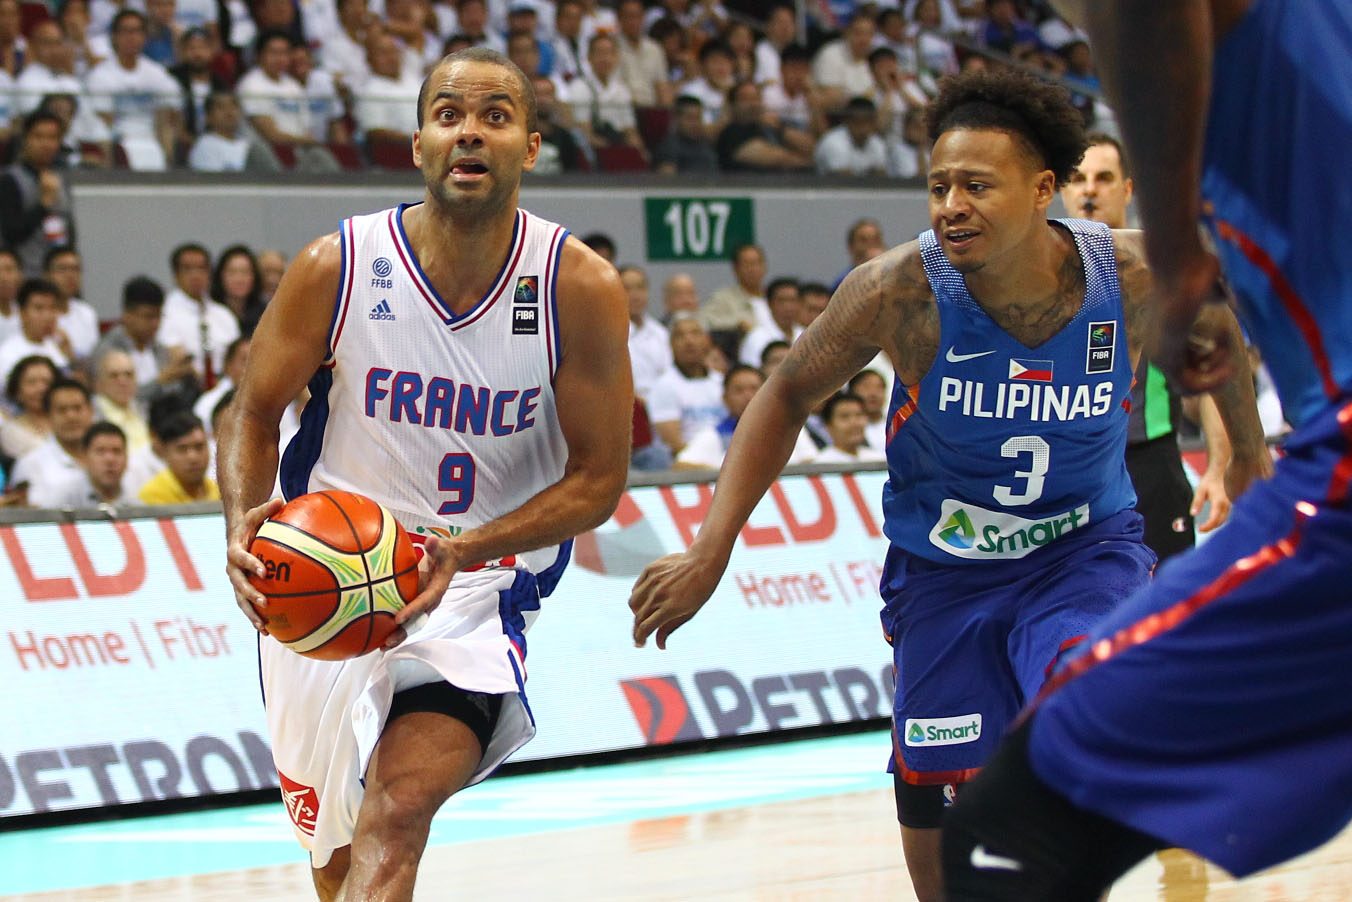 WATCH: Gilas Pilipinas vs France highlights